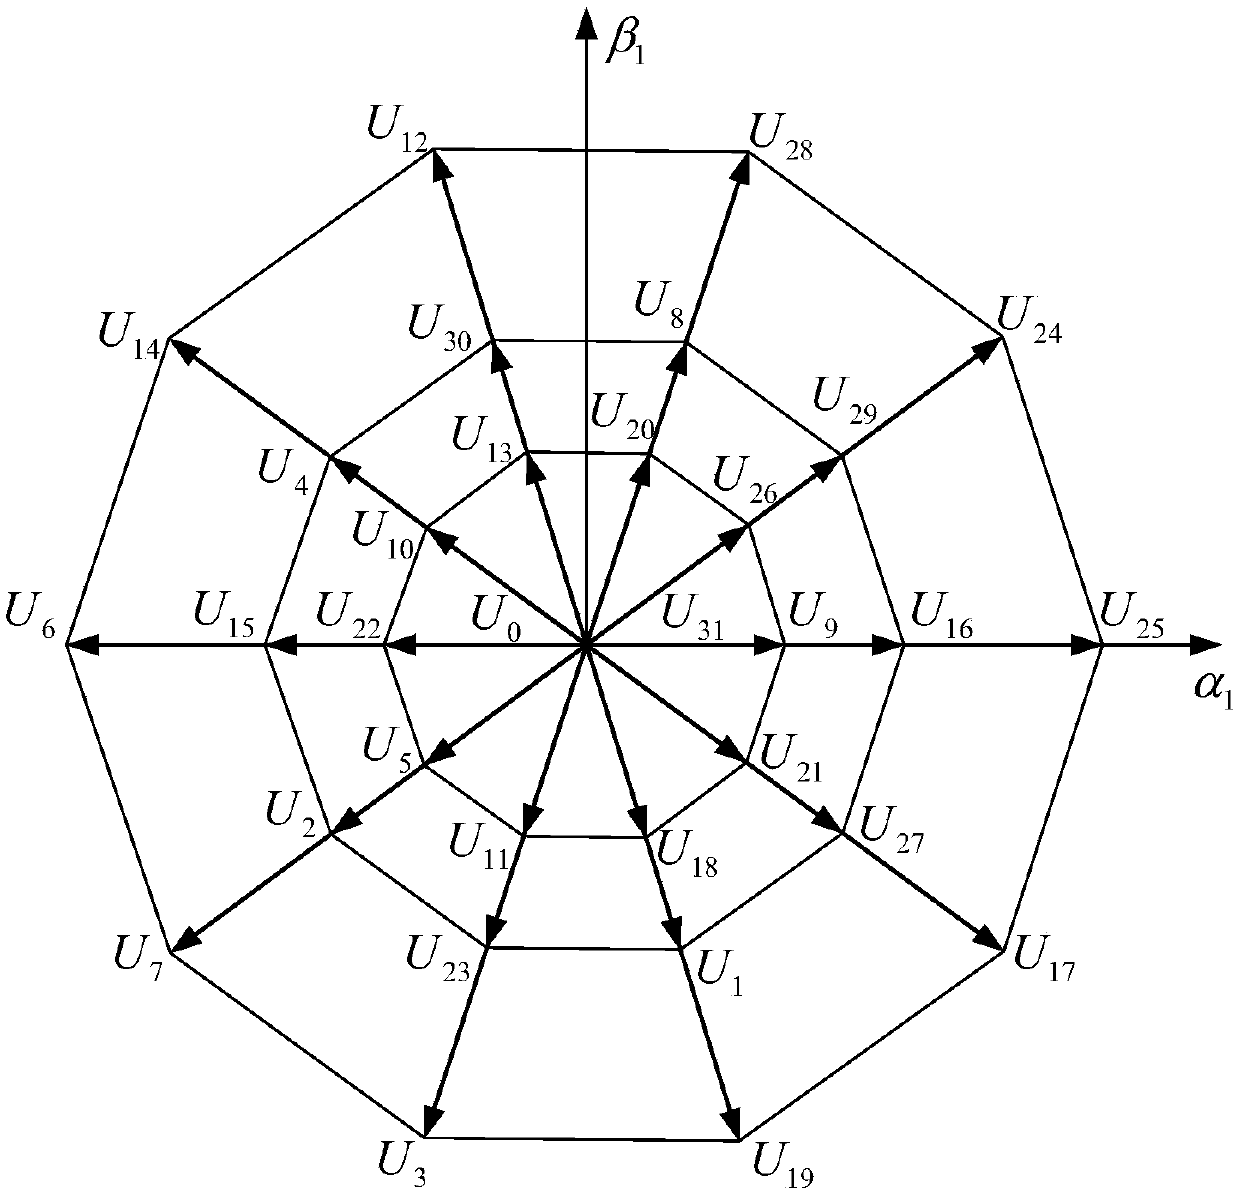 A random svpwm modulation method for five-phase inverter